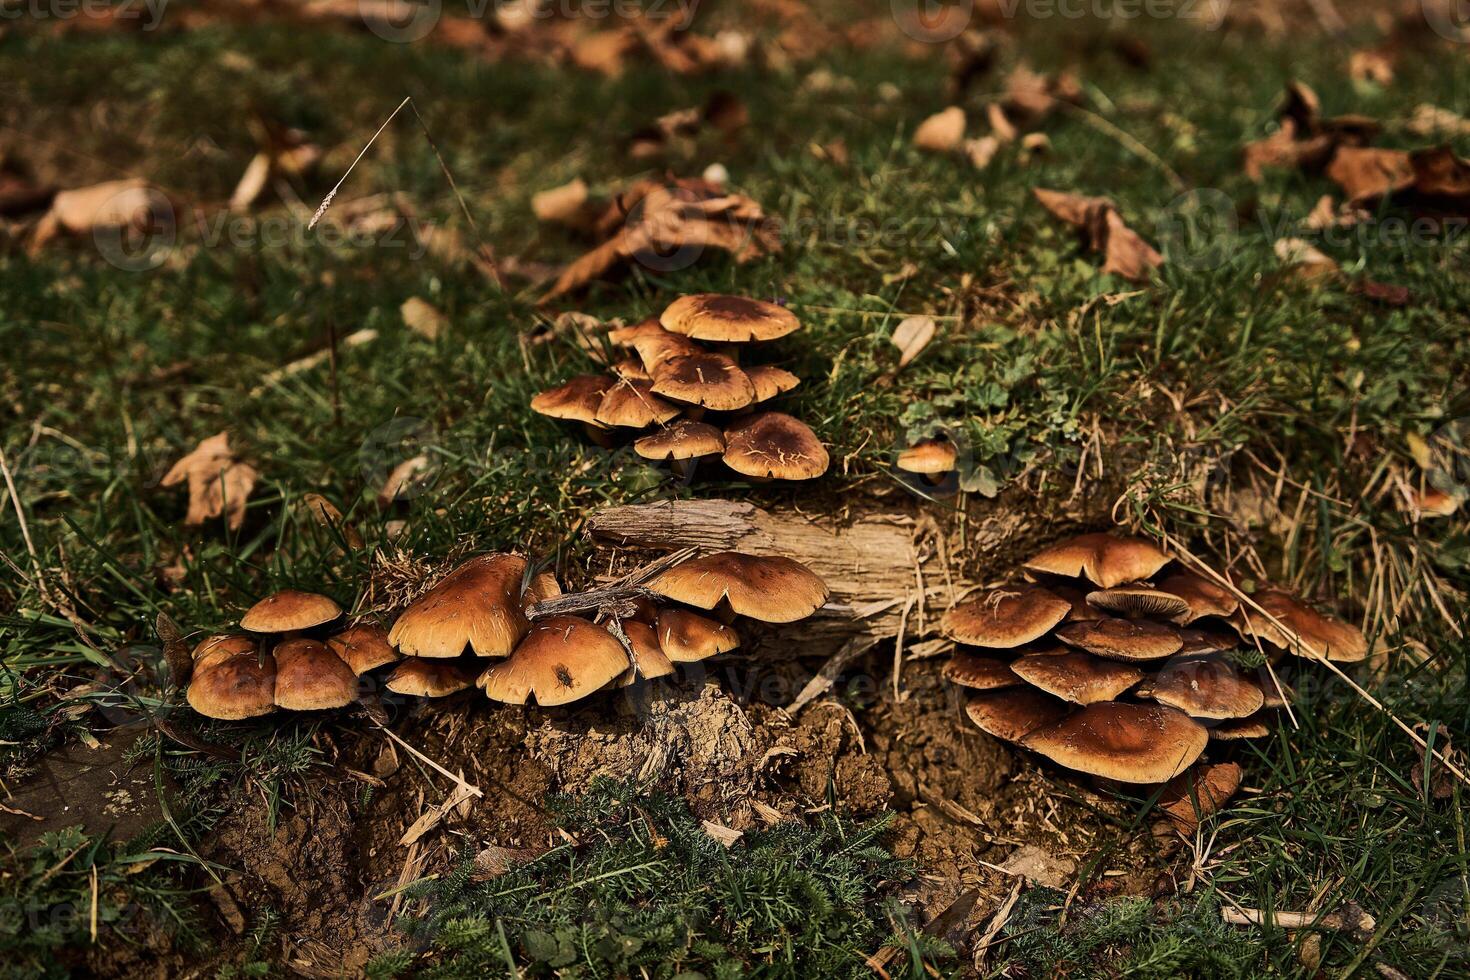 Scattered mushrooms near the stump photo